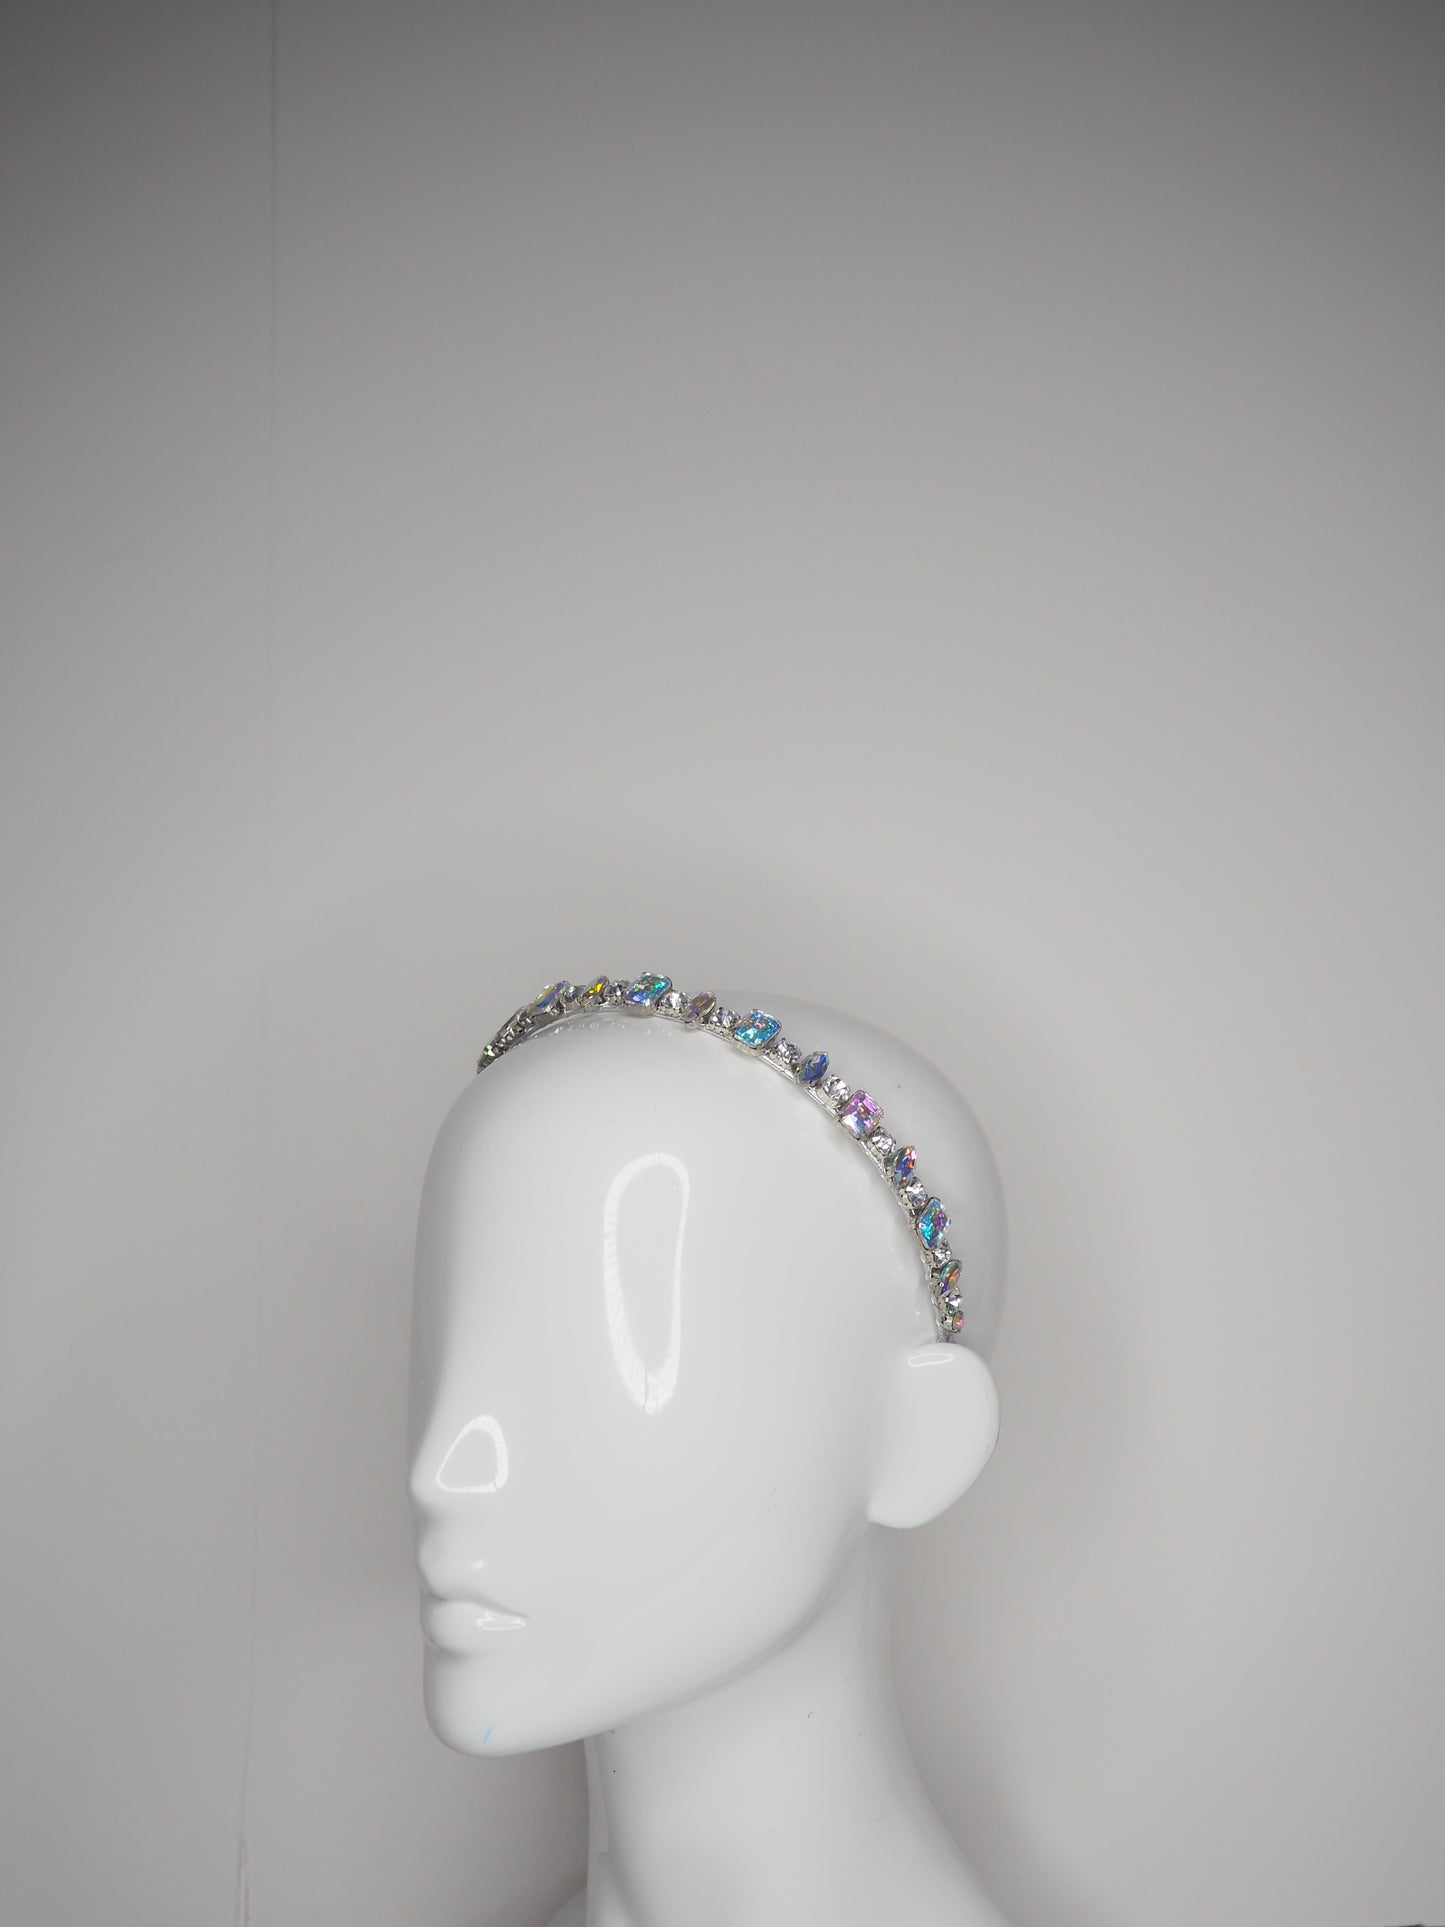 Liz - Iridescent headband with silver leather headband